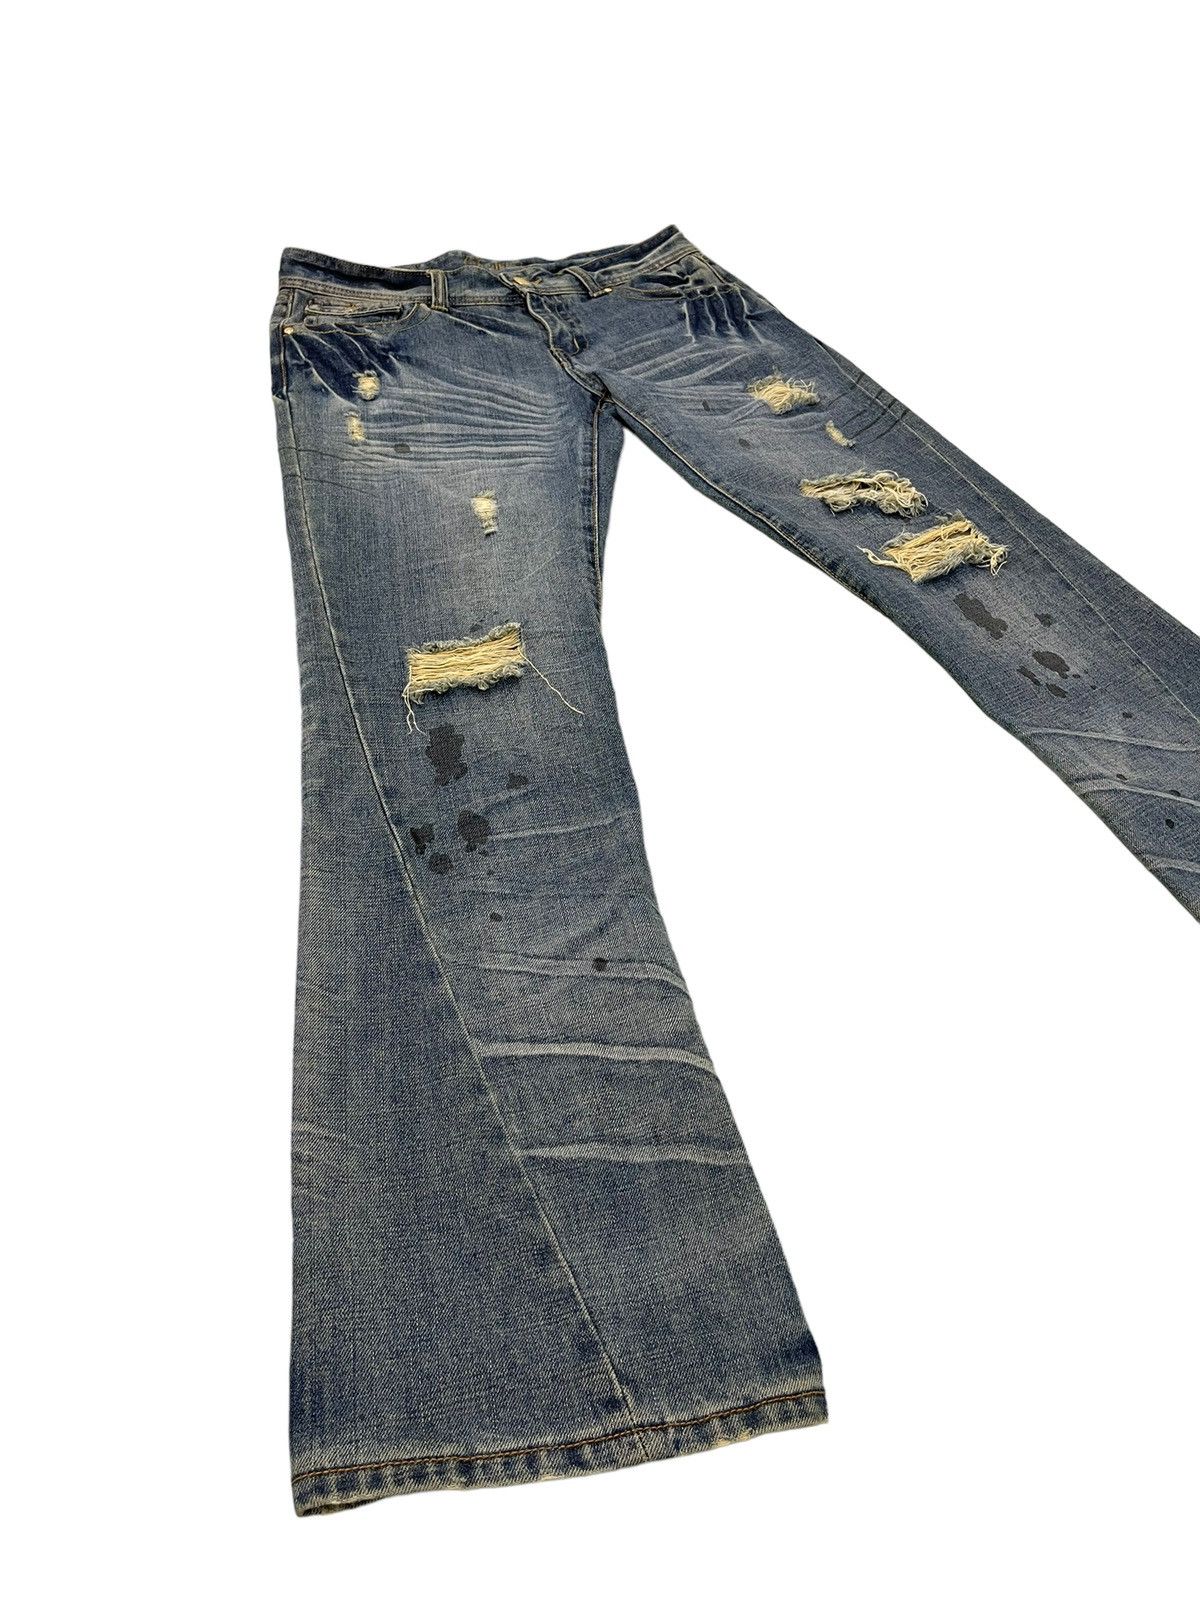 Hype Flare Jeans Snuff Distress Denim Acid Wash Clawmark 6🟦 | Grailed